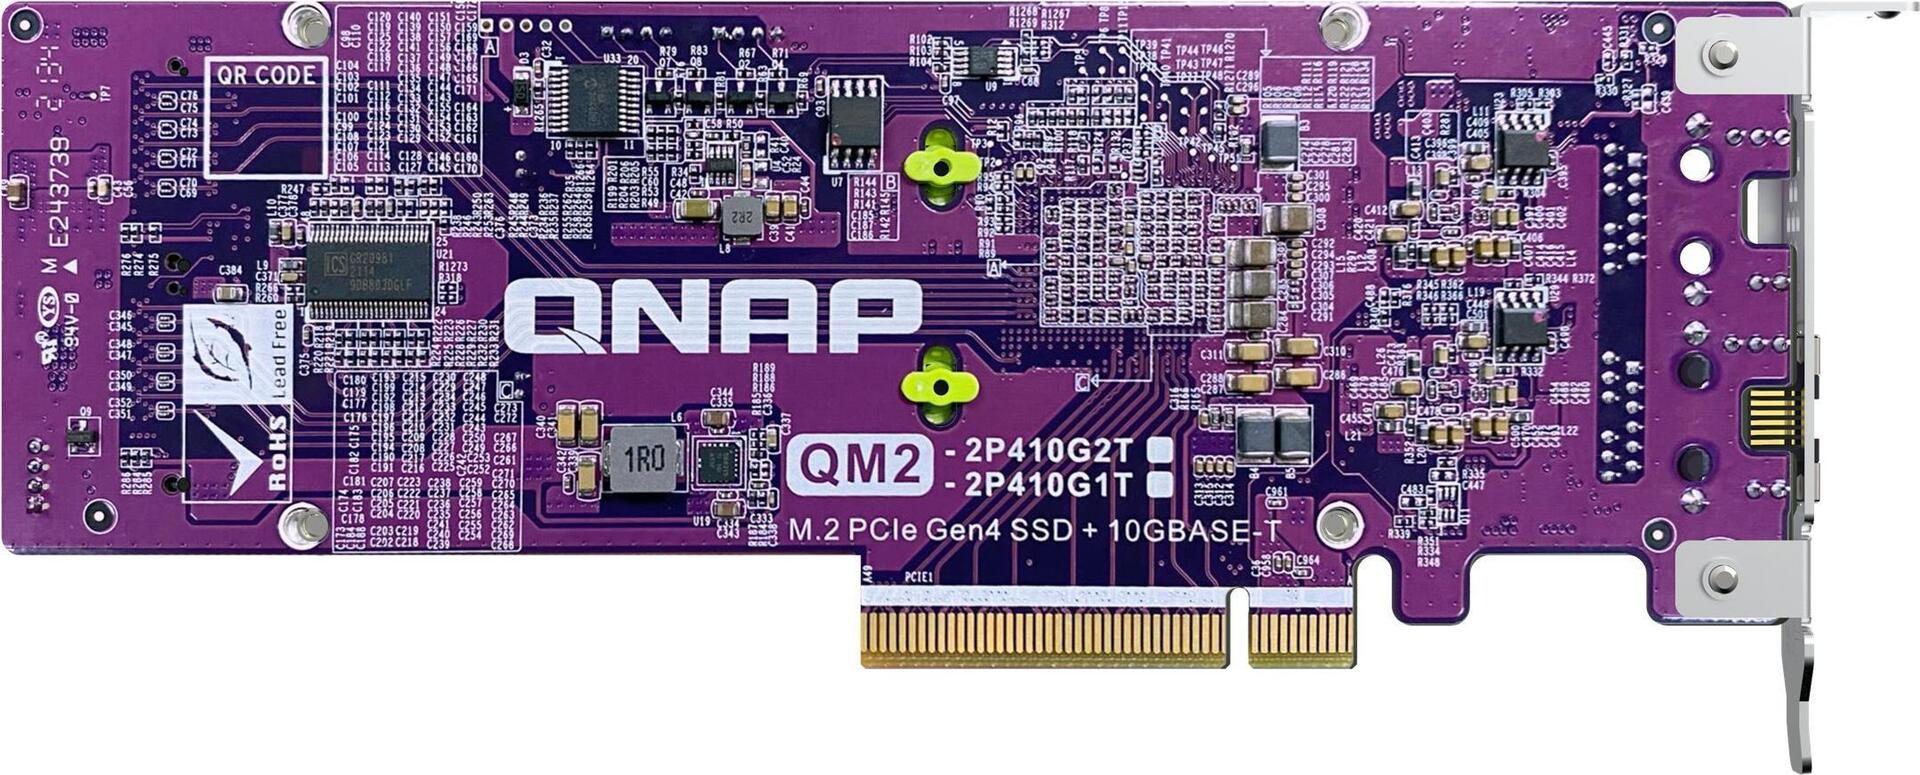 QNAP Card QM2 series 2xPCIe 2280 M.2 SSD slots PCIe Gen4x8 2xAQC113C 10GbE NBASE-T port